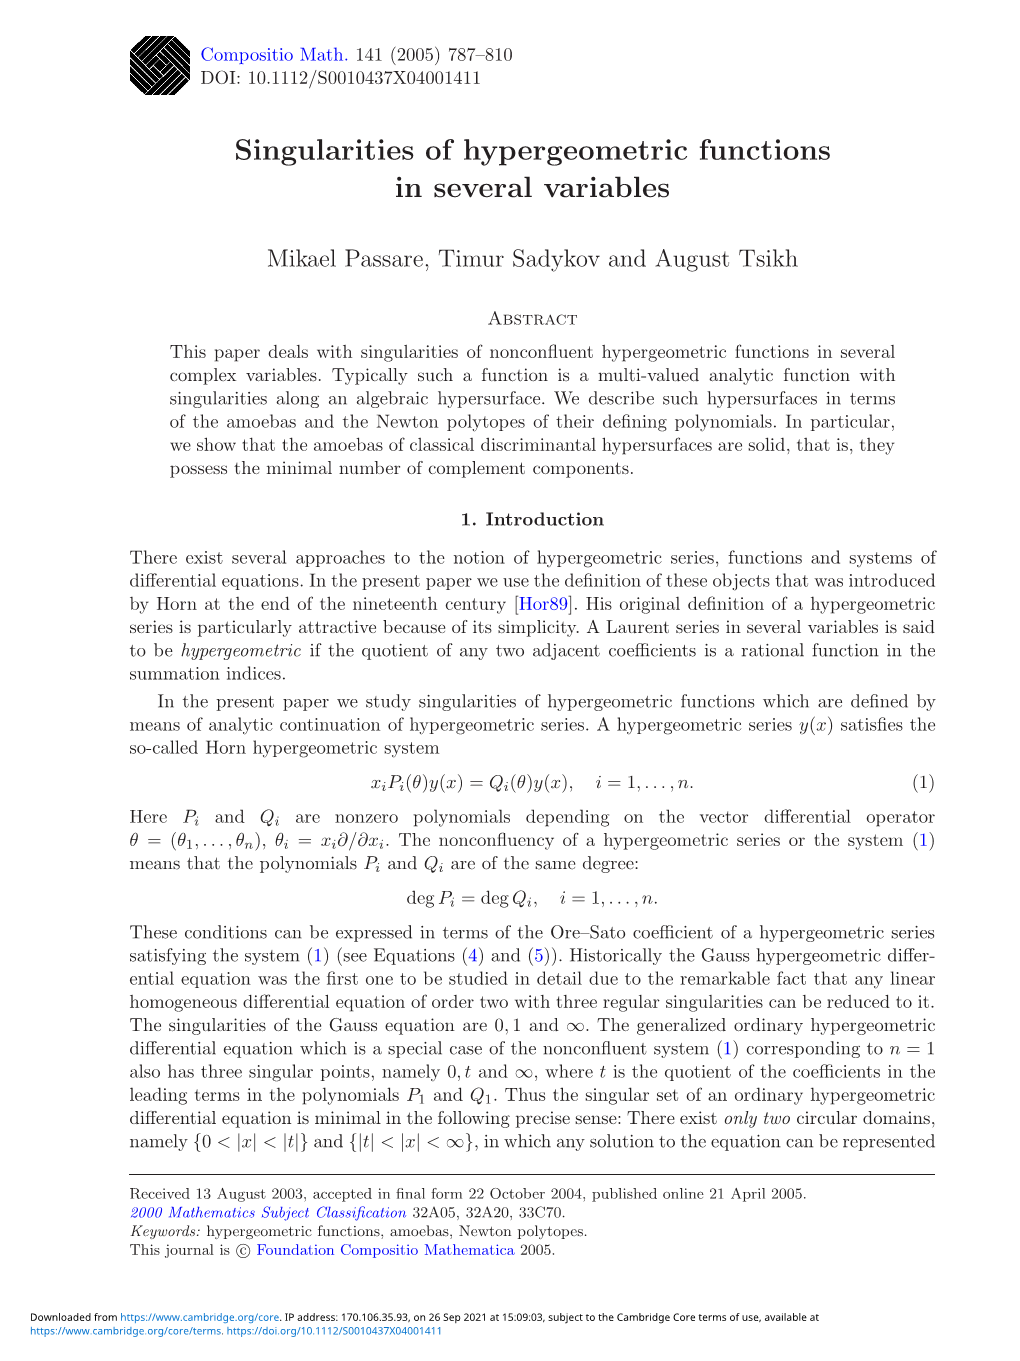 Singularities of Hypergeometric Functions in Several Variables